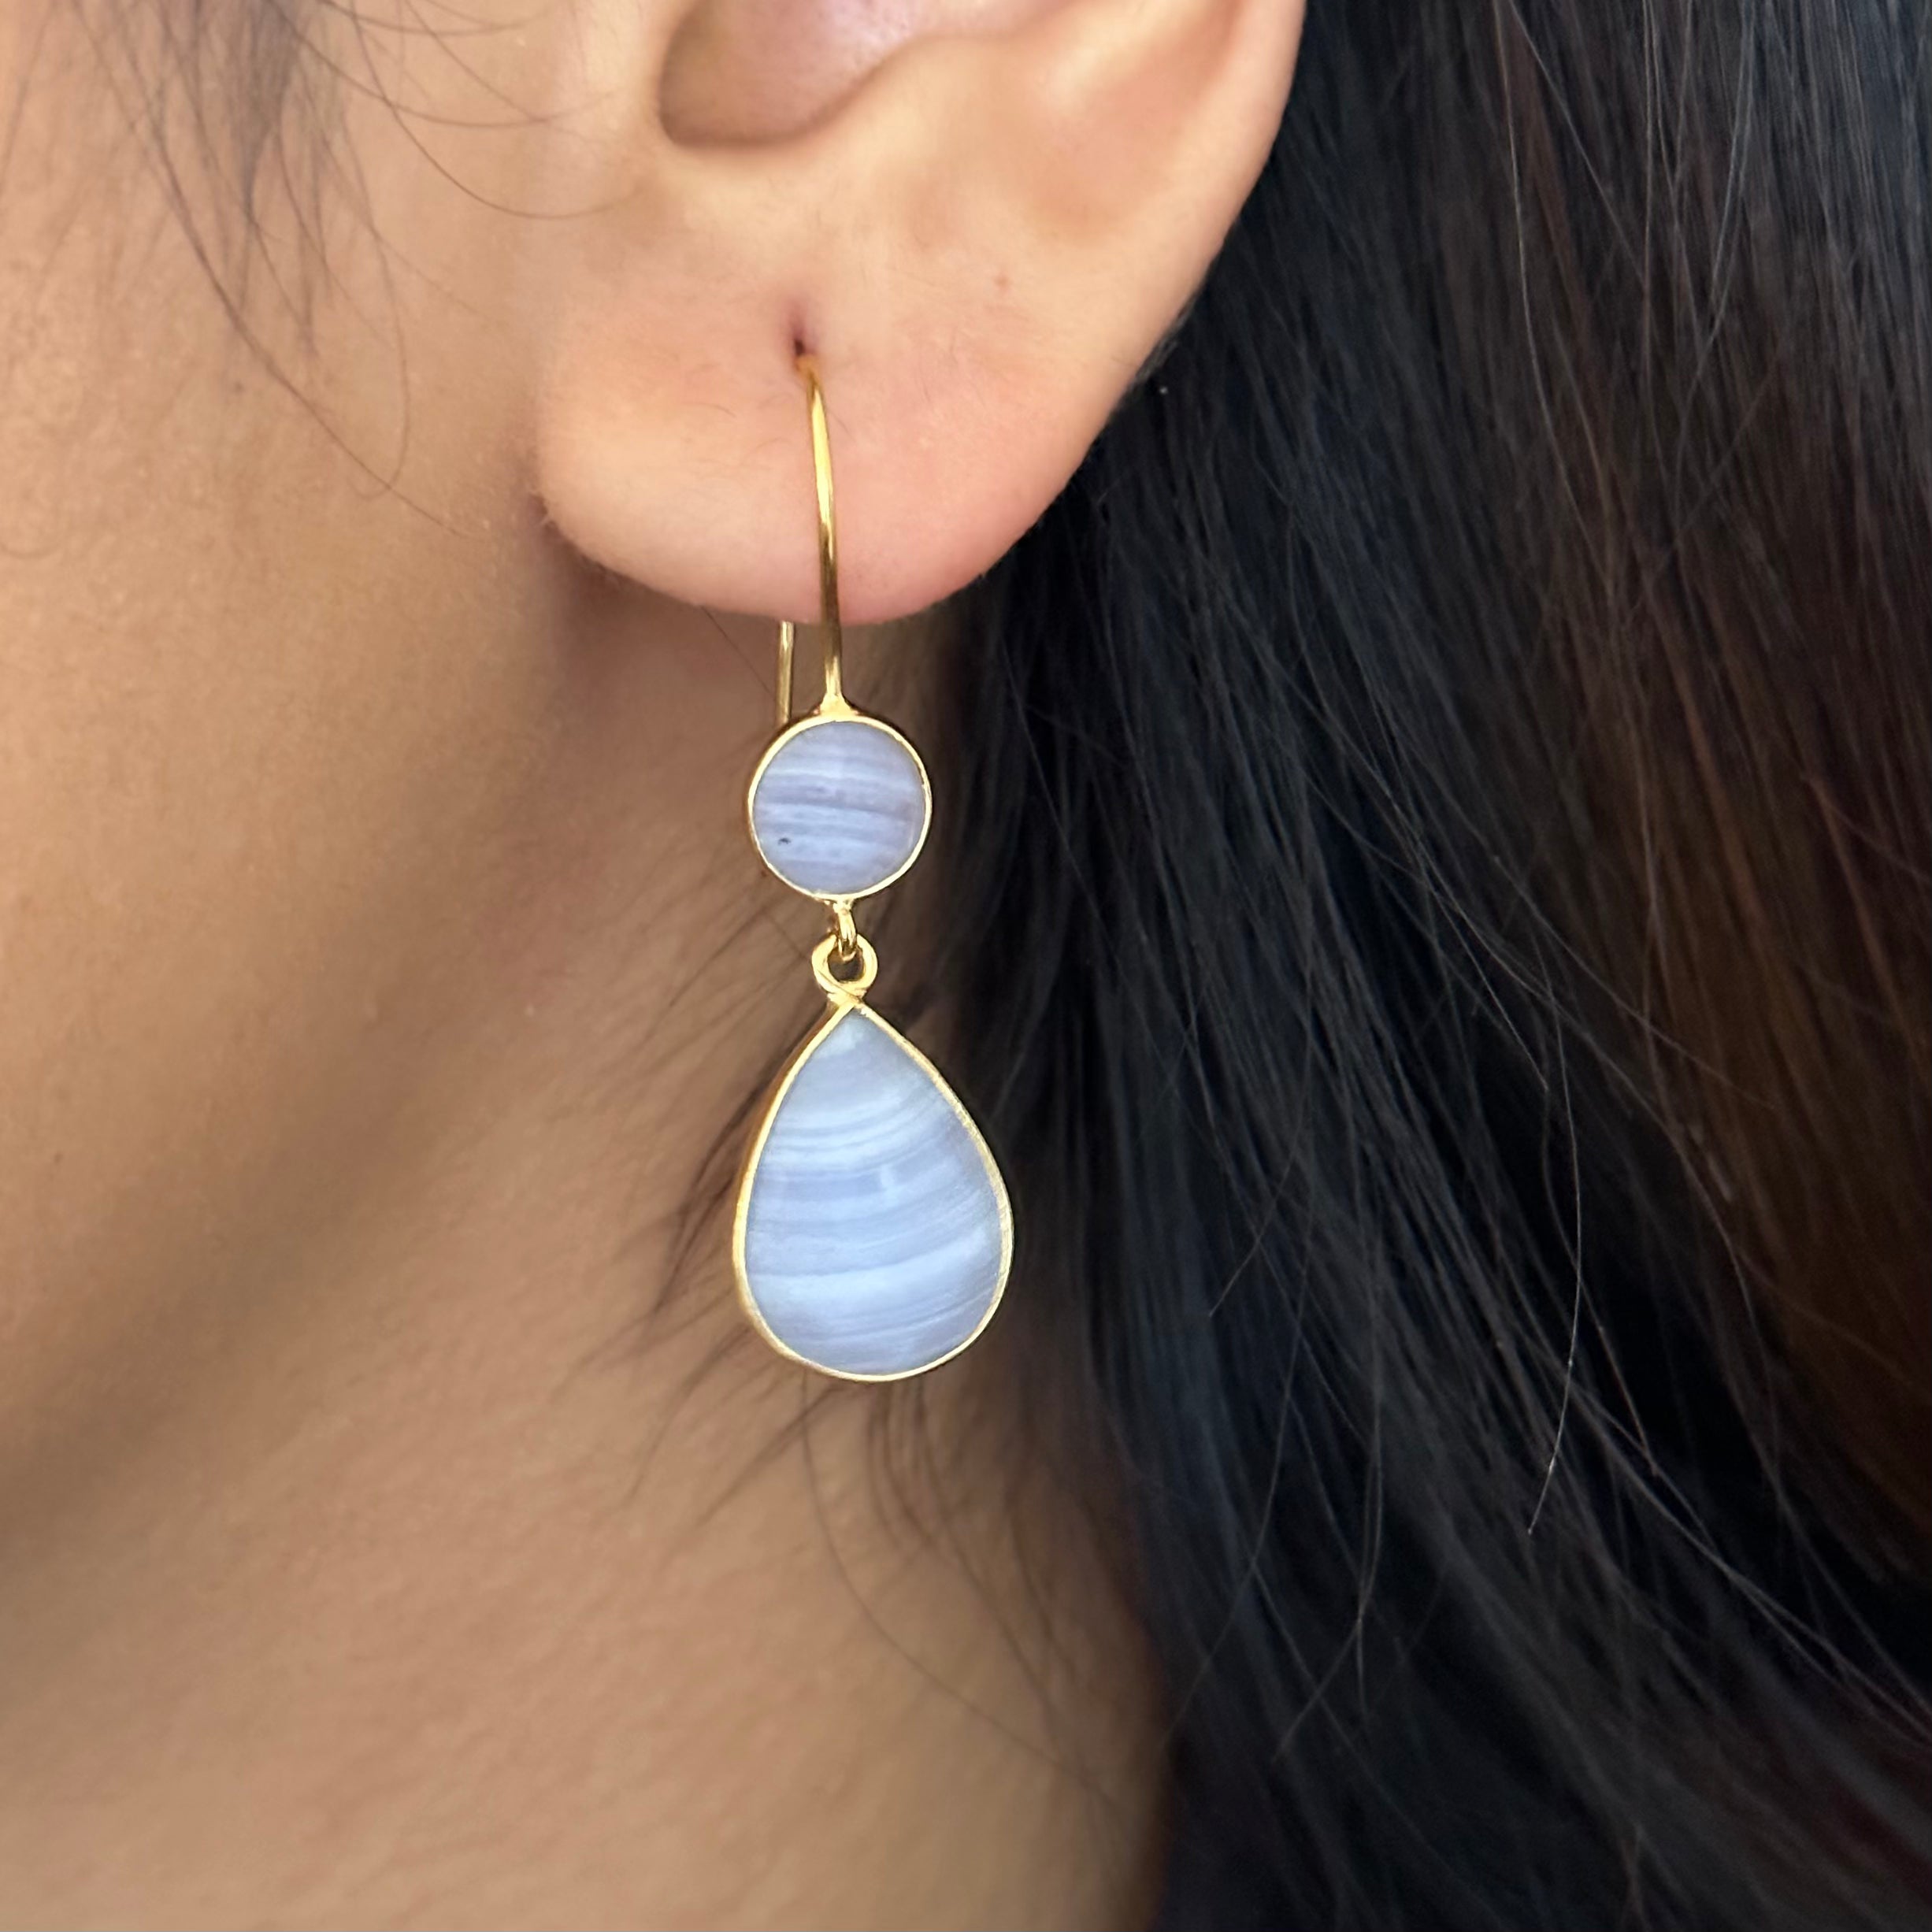 Blue Laced Agate Gemstone Two Stone Earrings in Gold Plated Sterling Silver - Teardrop